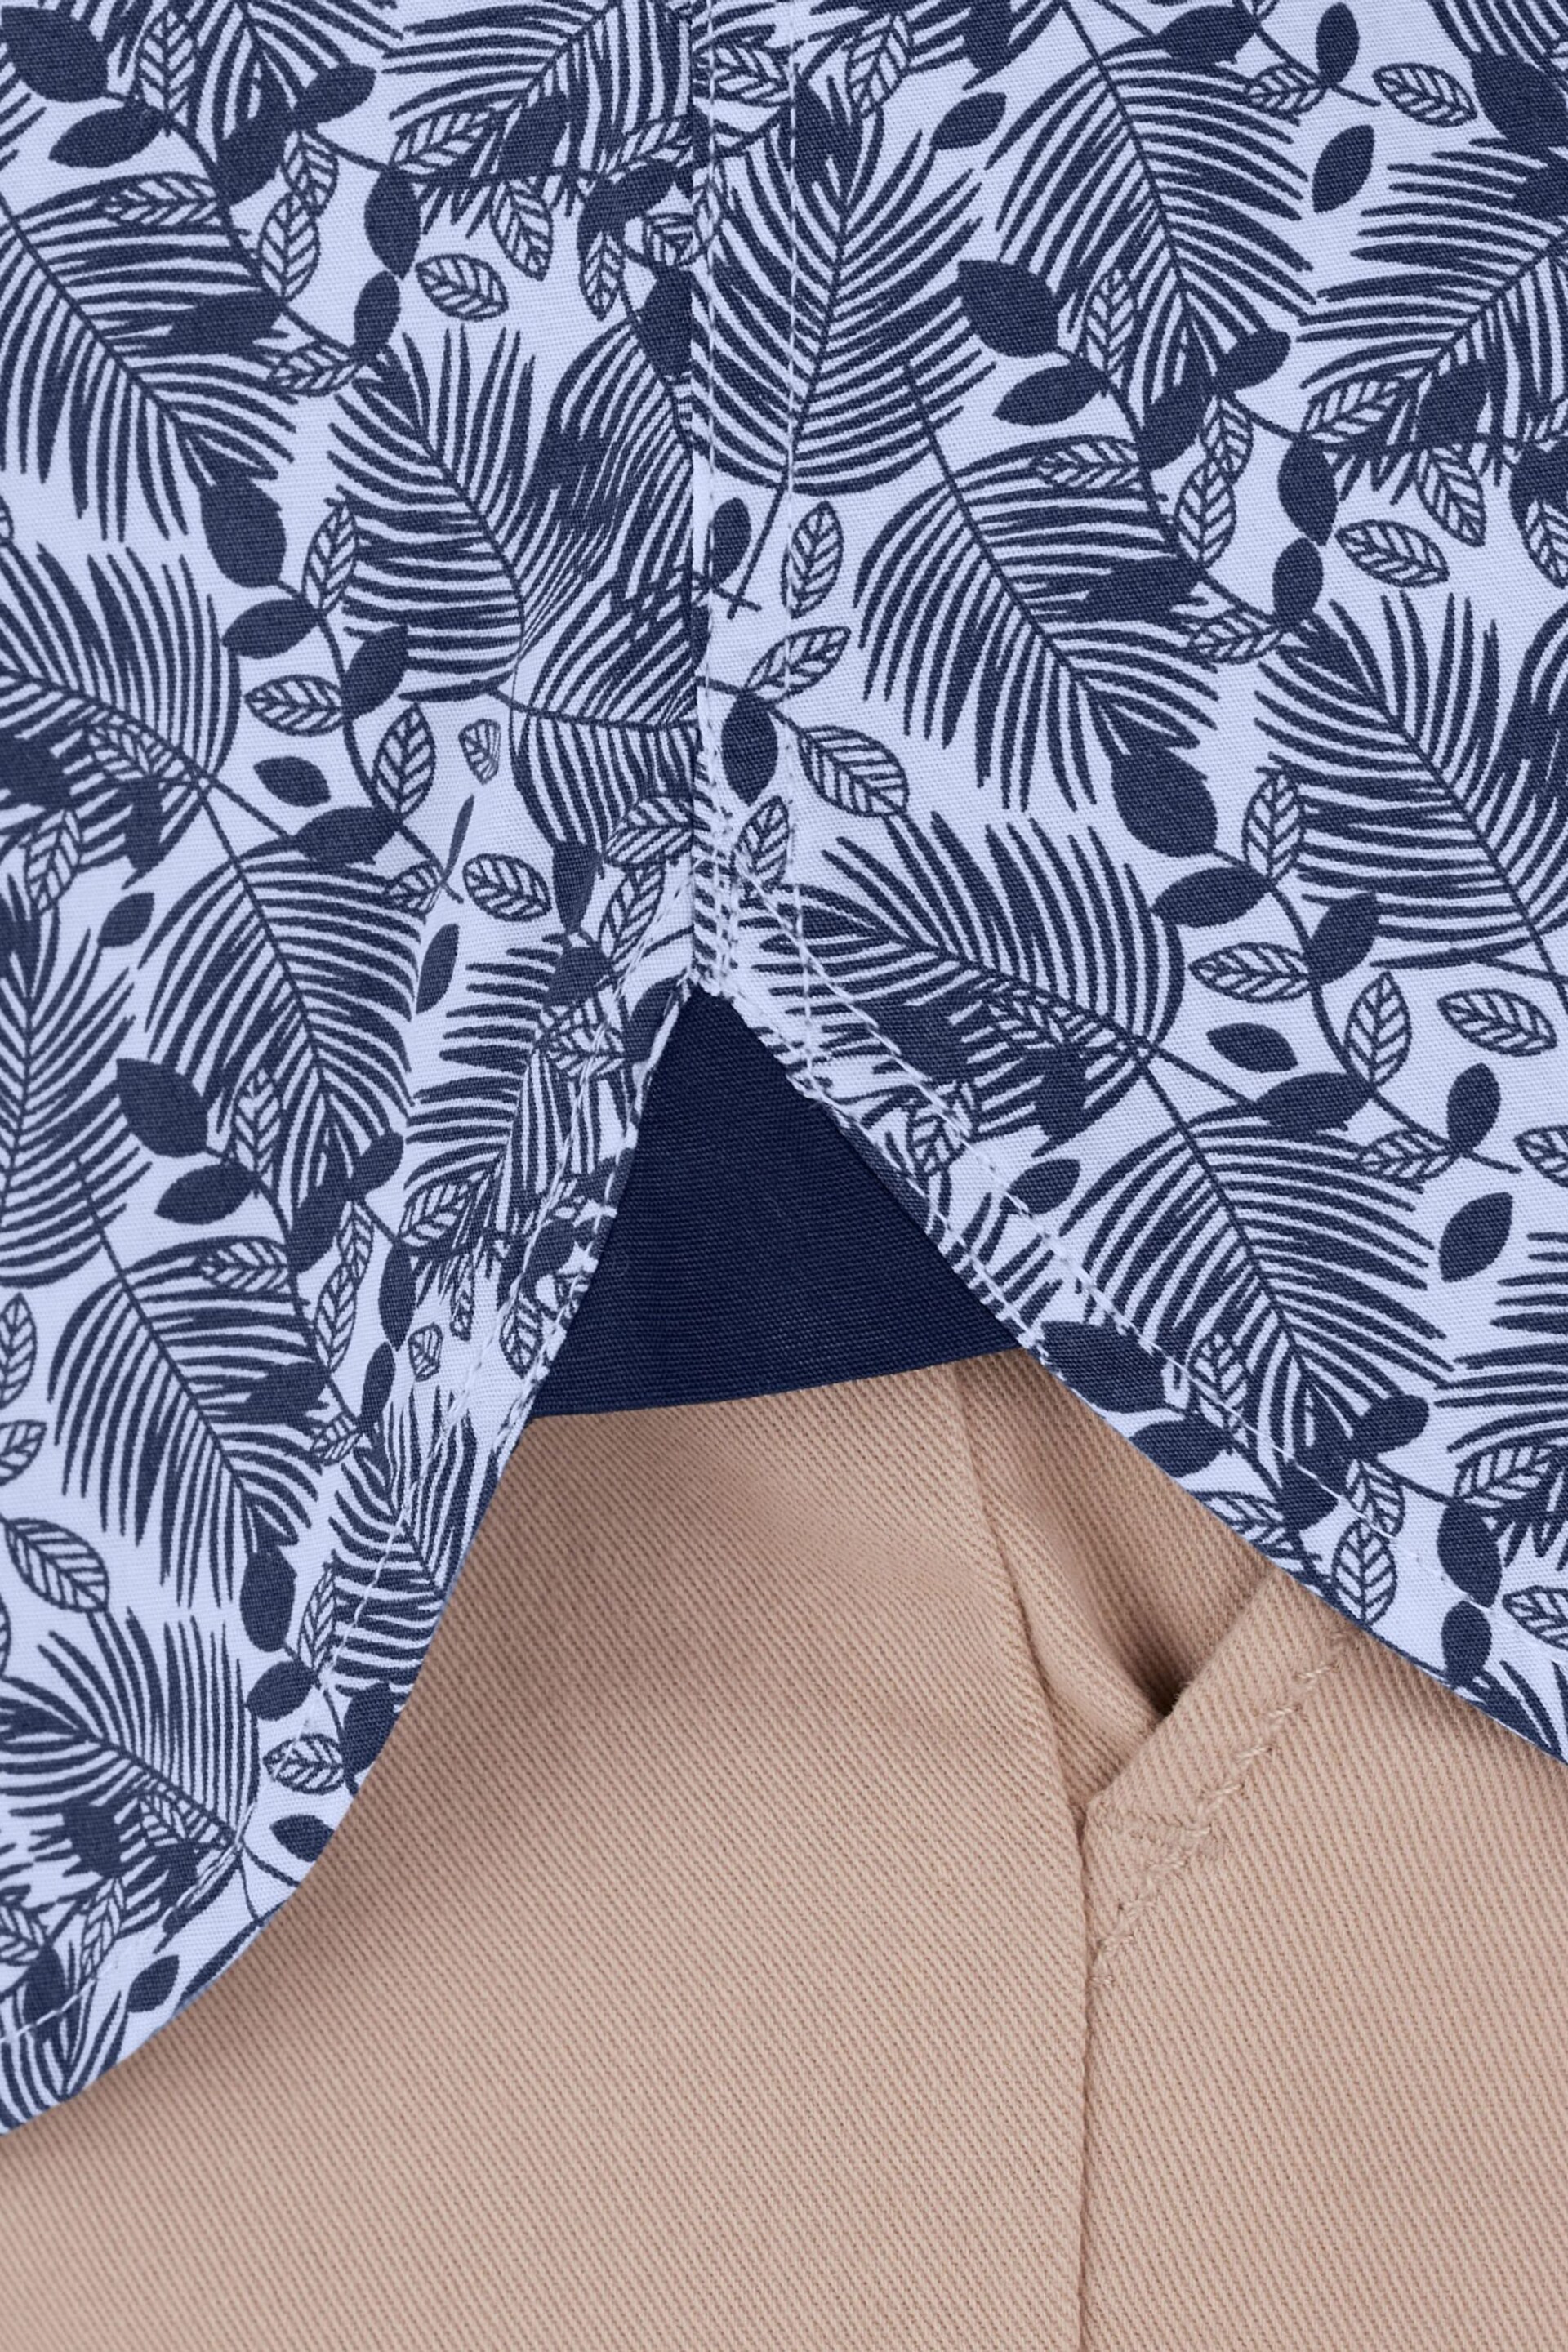 Raging Bull Short Sleeve Leaf Print Poplin Blue Shirt - Image 5 of 6